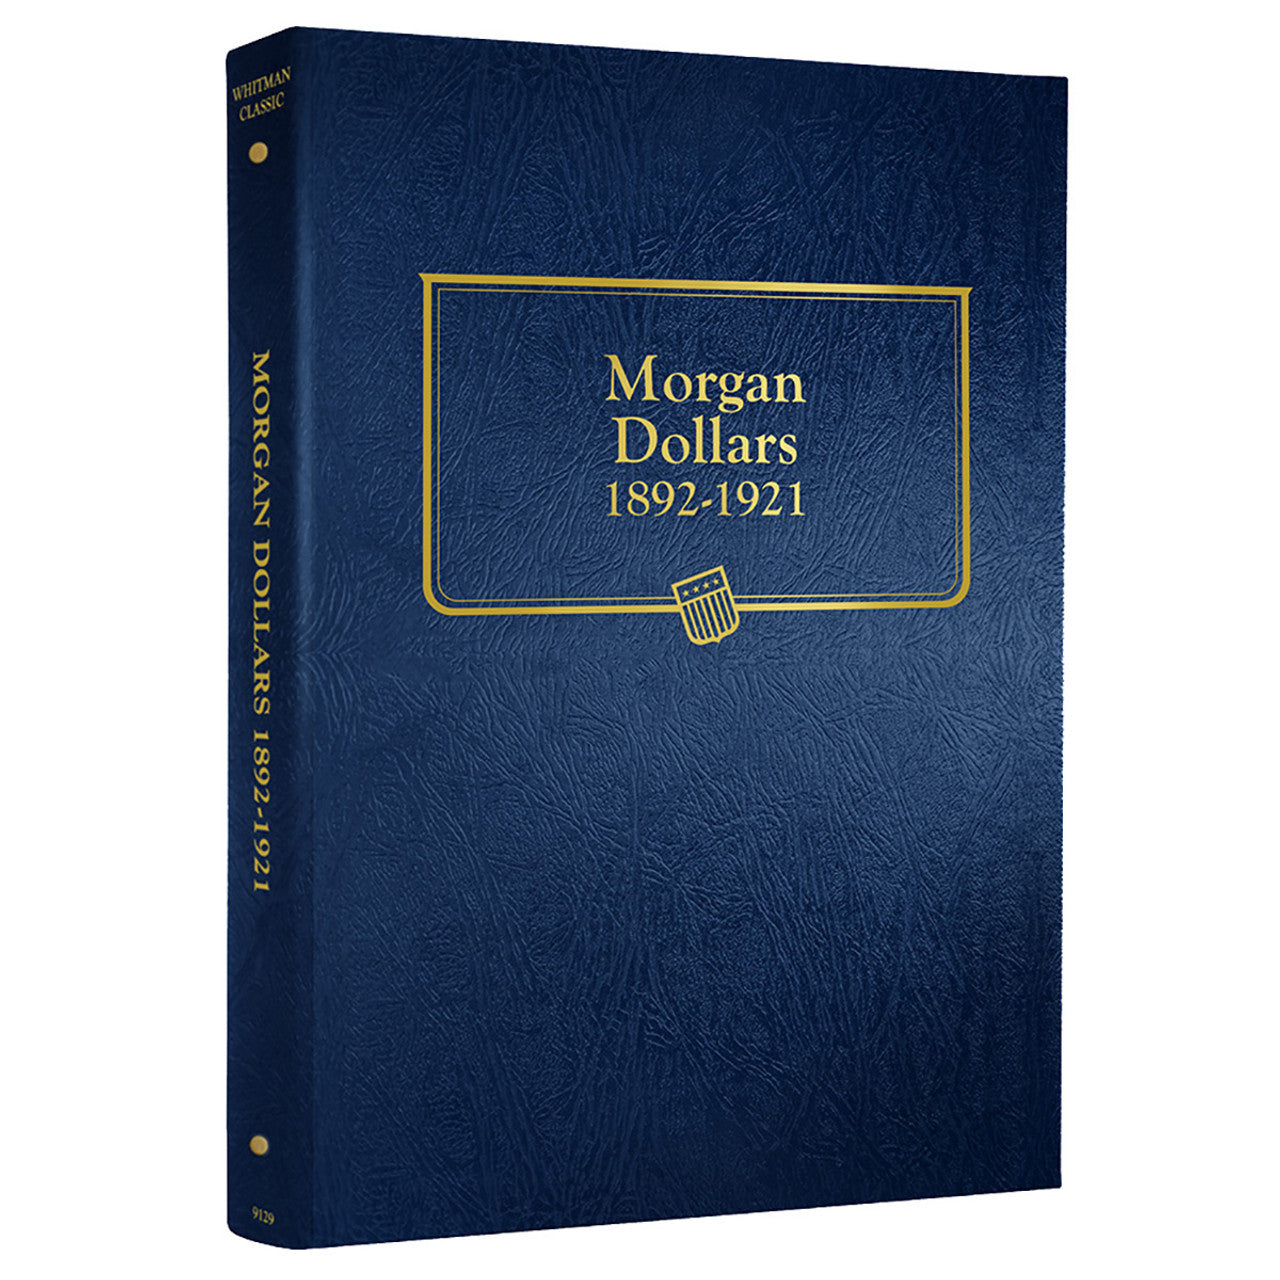 Whitman Morgan Dollars 1892-1921 Album